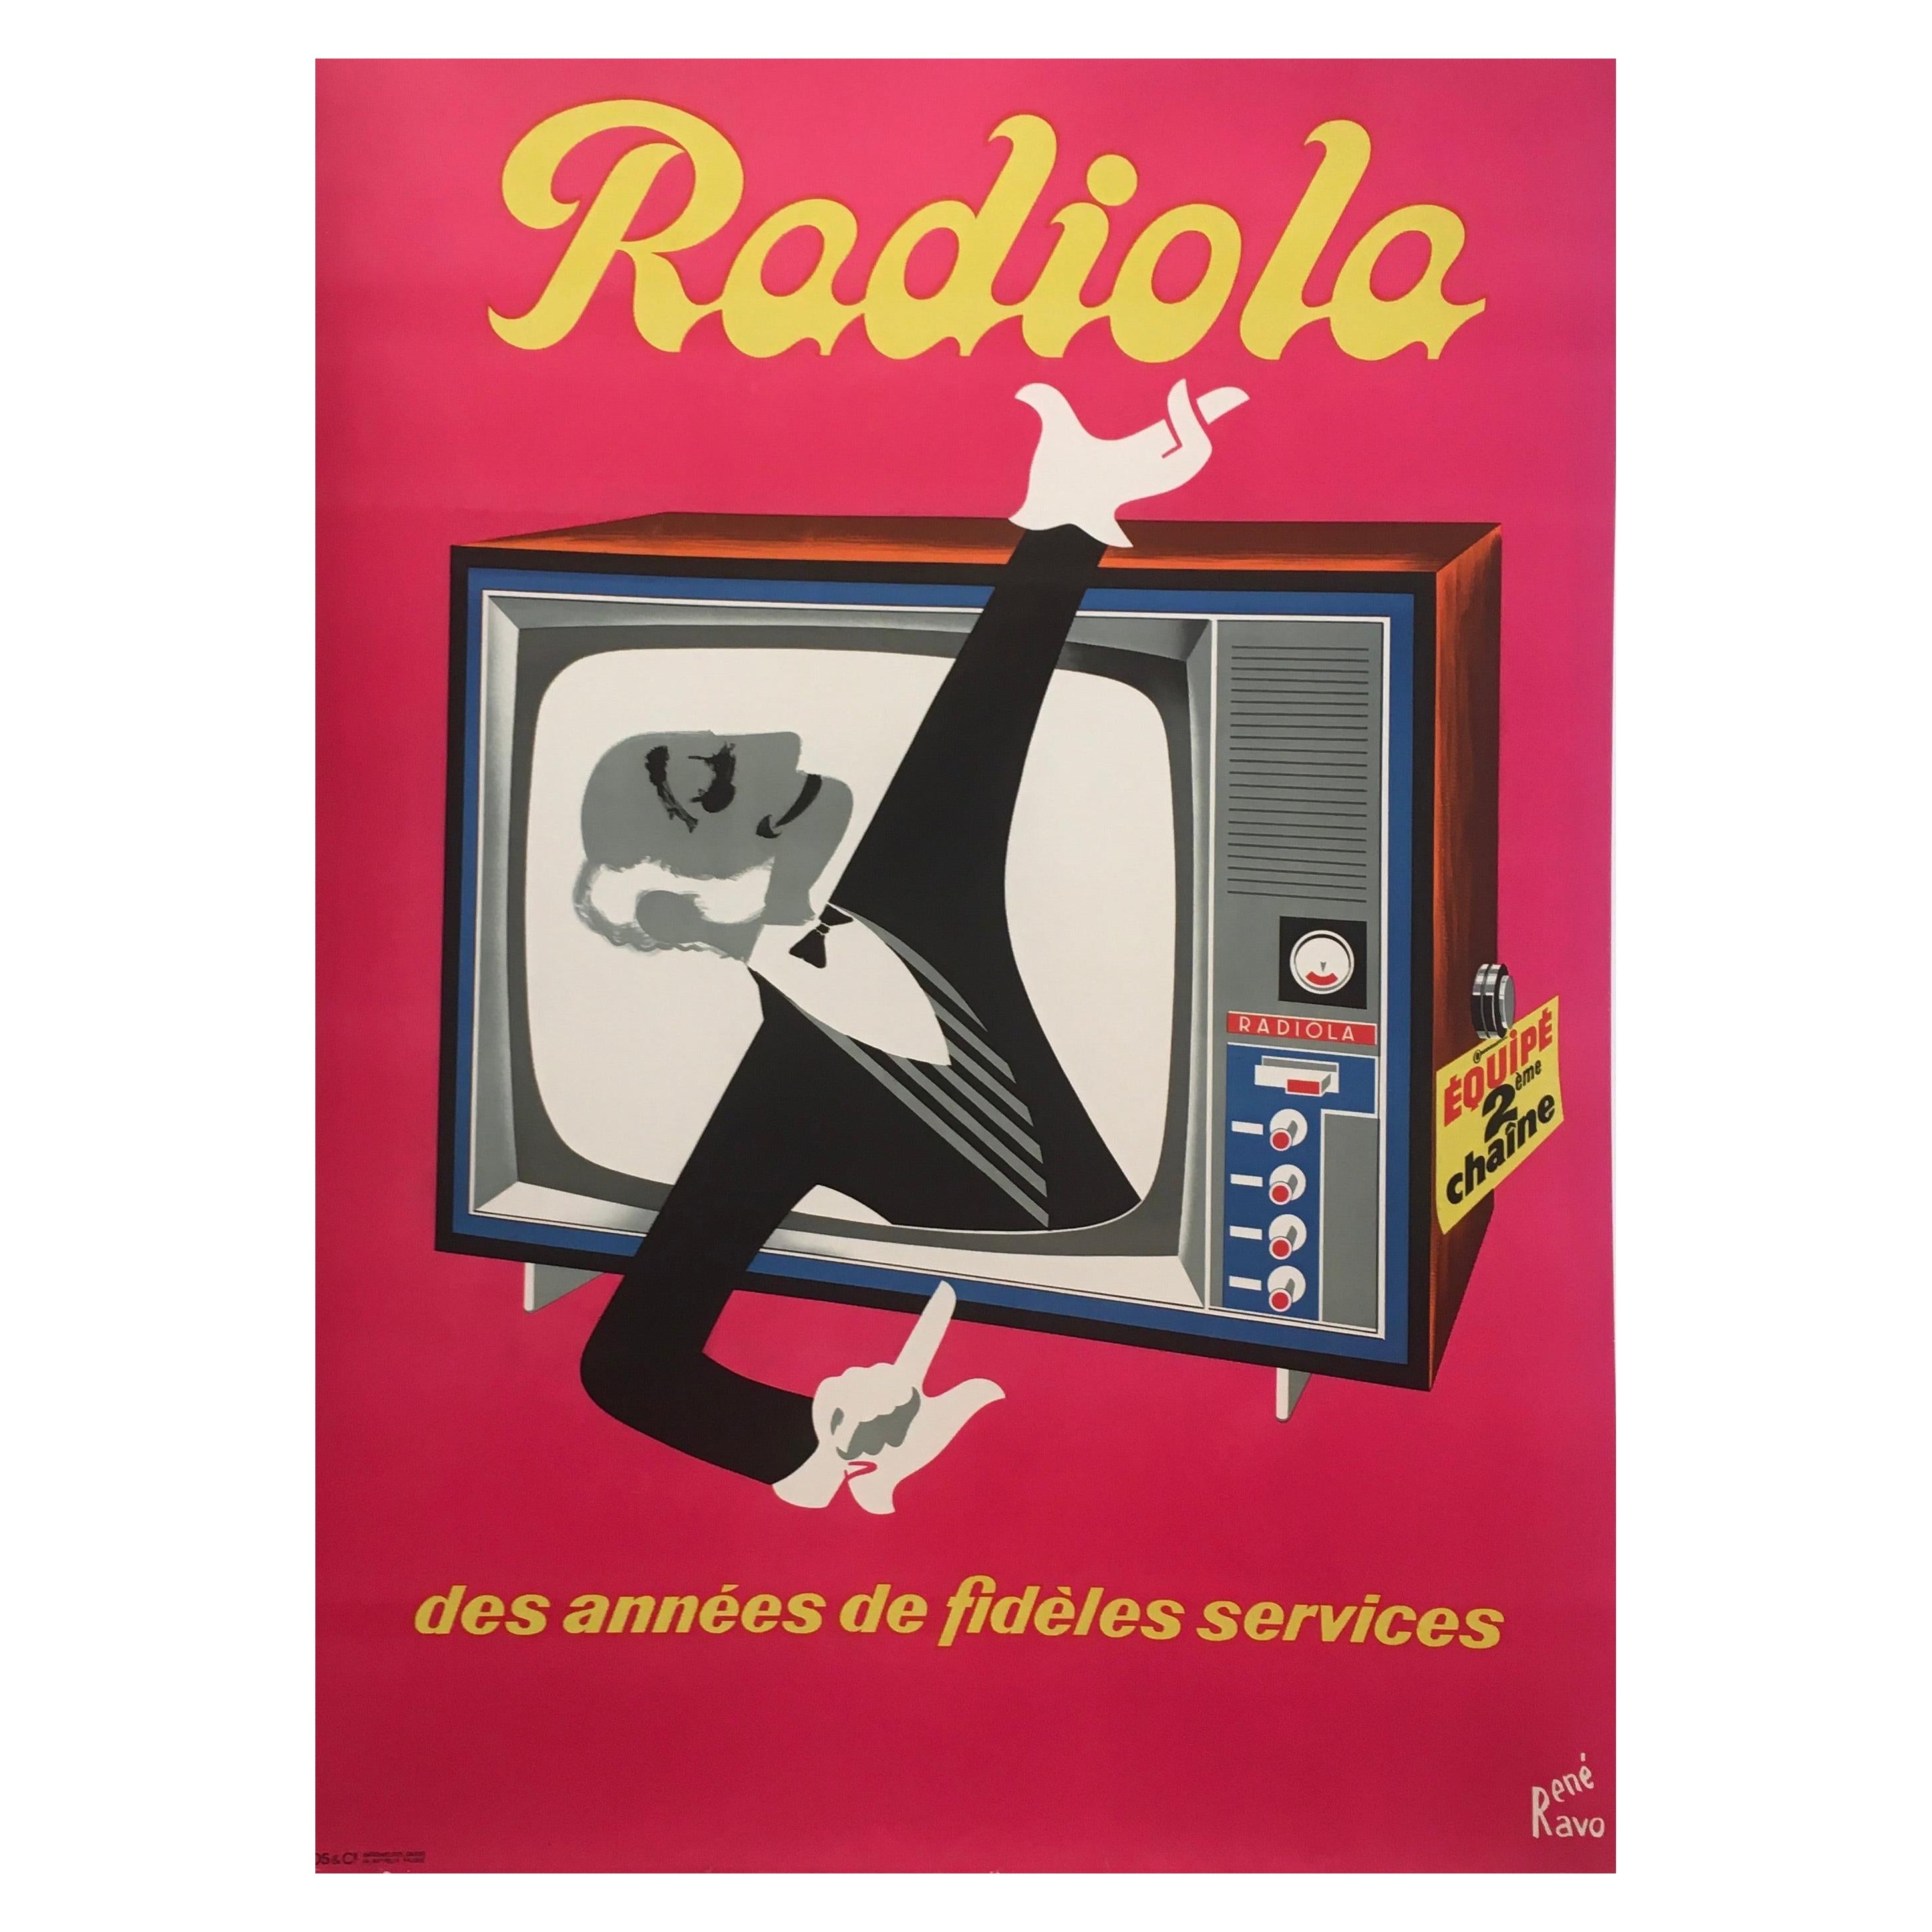 French Original Mid-Century Advertising Poster, 'Radiola' Designed by Rene Ravo